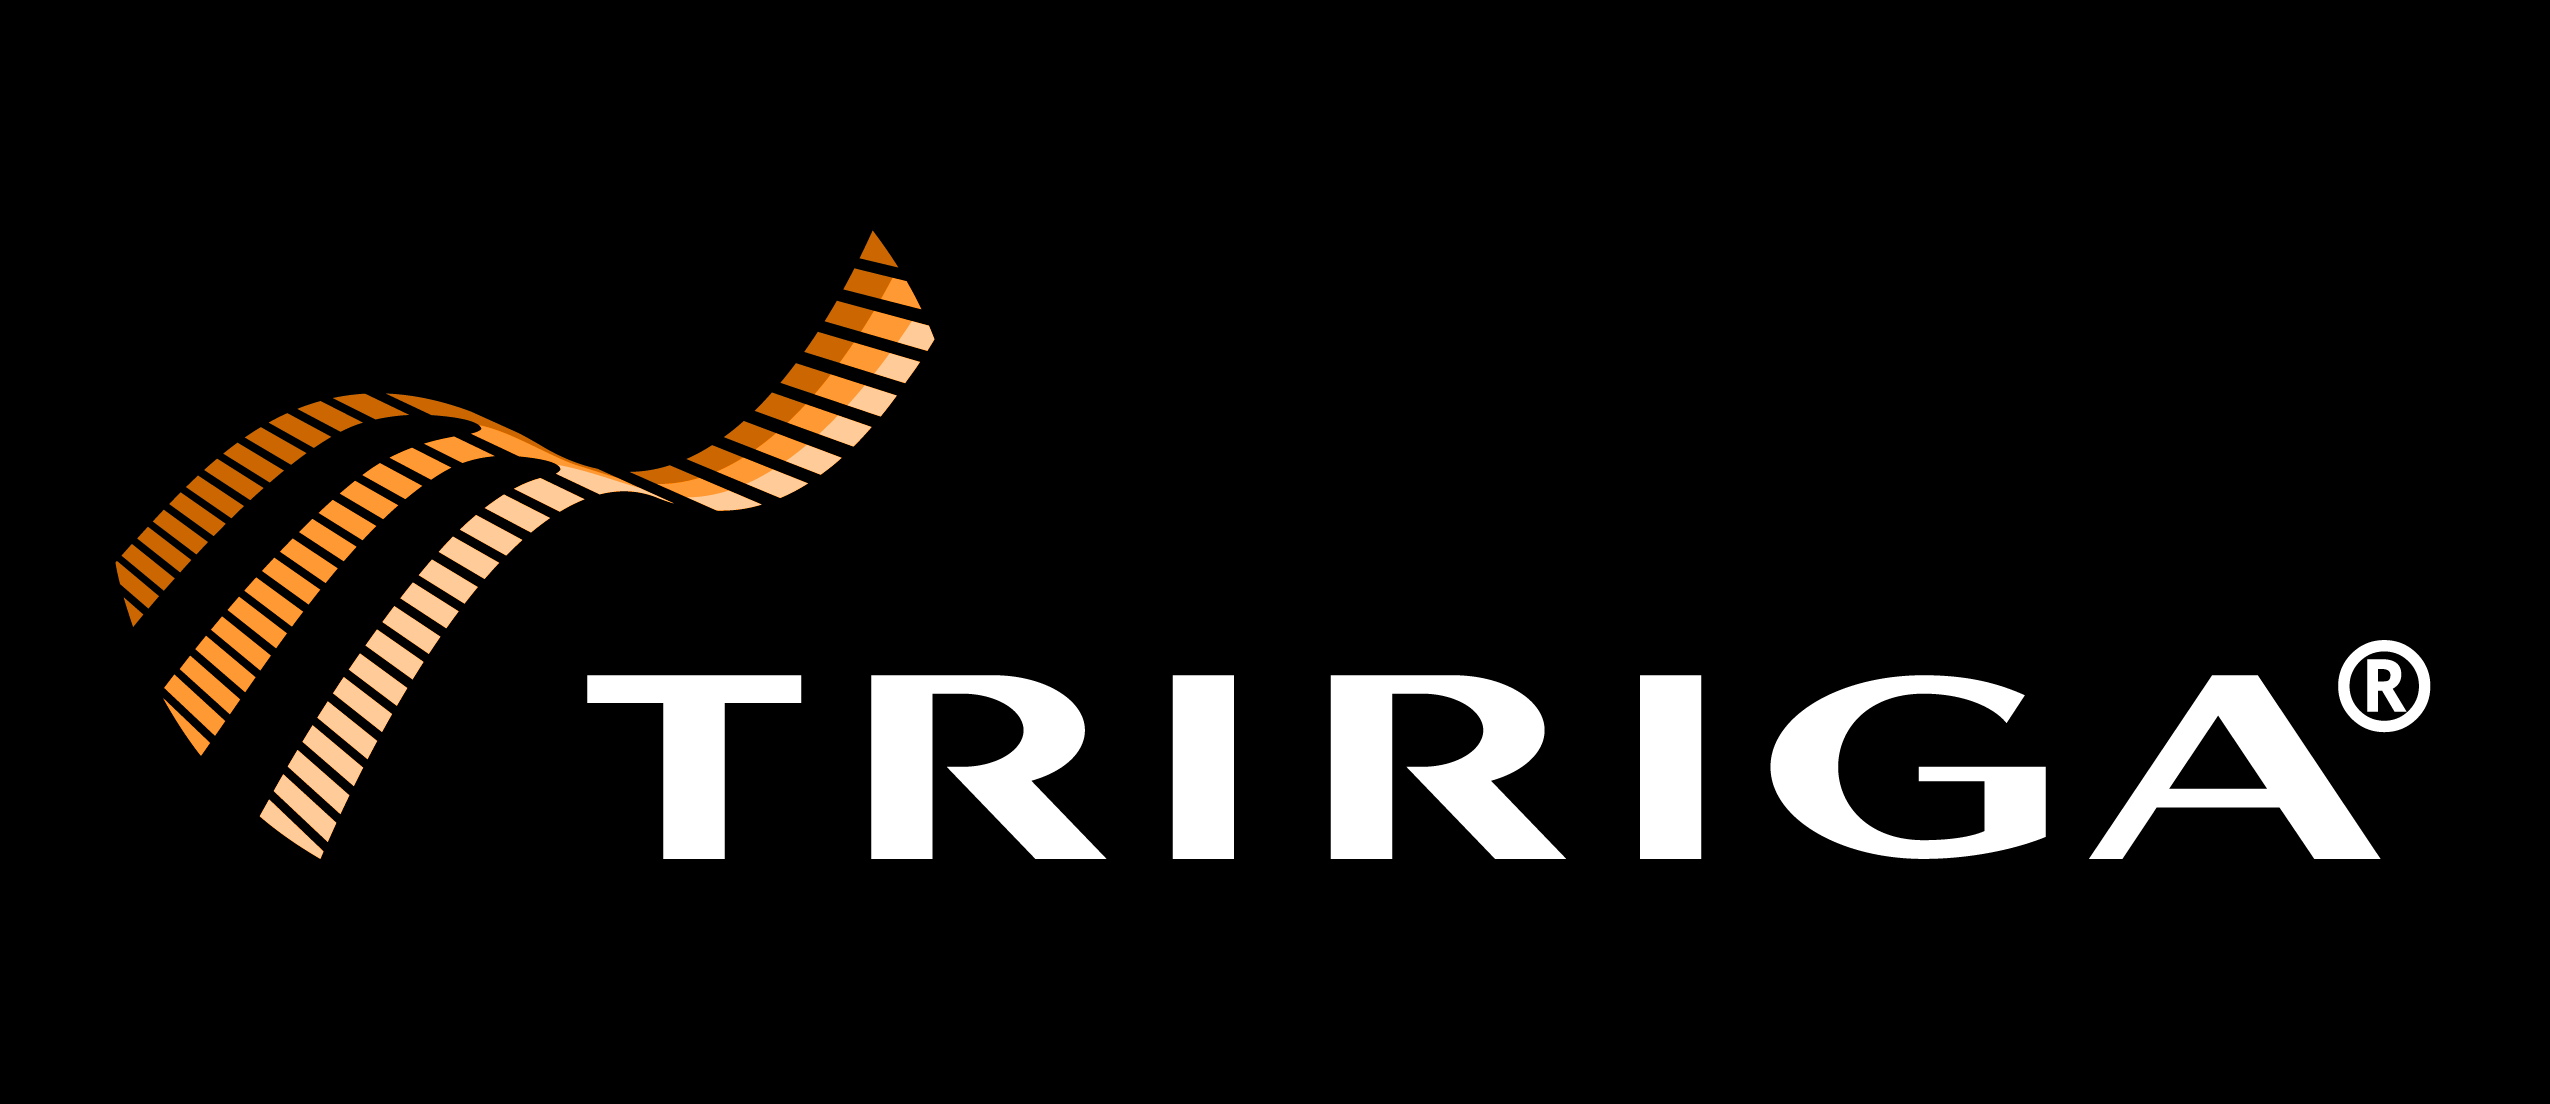 TRIRIGA Logo - Tririga Logo Inverted.png